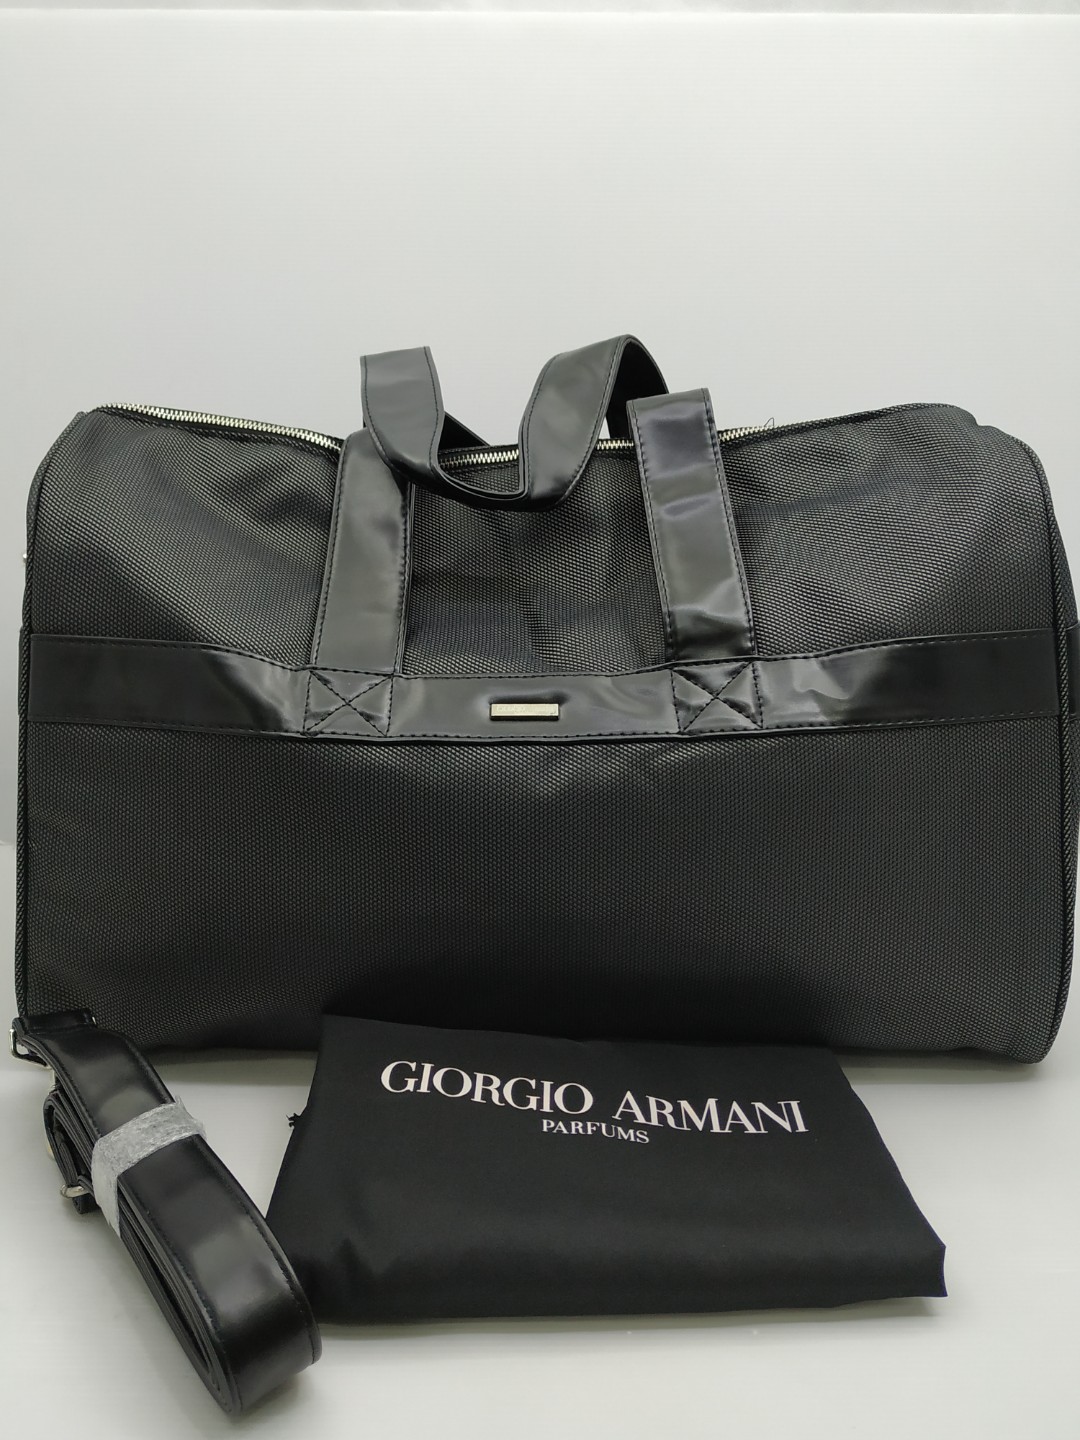 giorgio armani clutch bag price